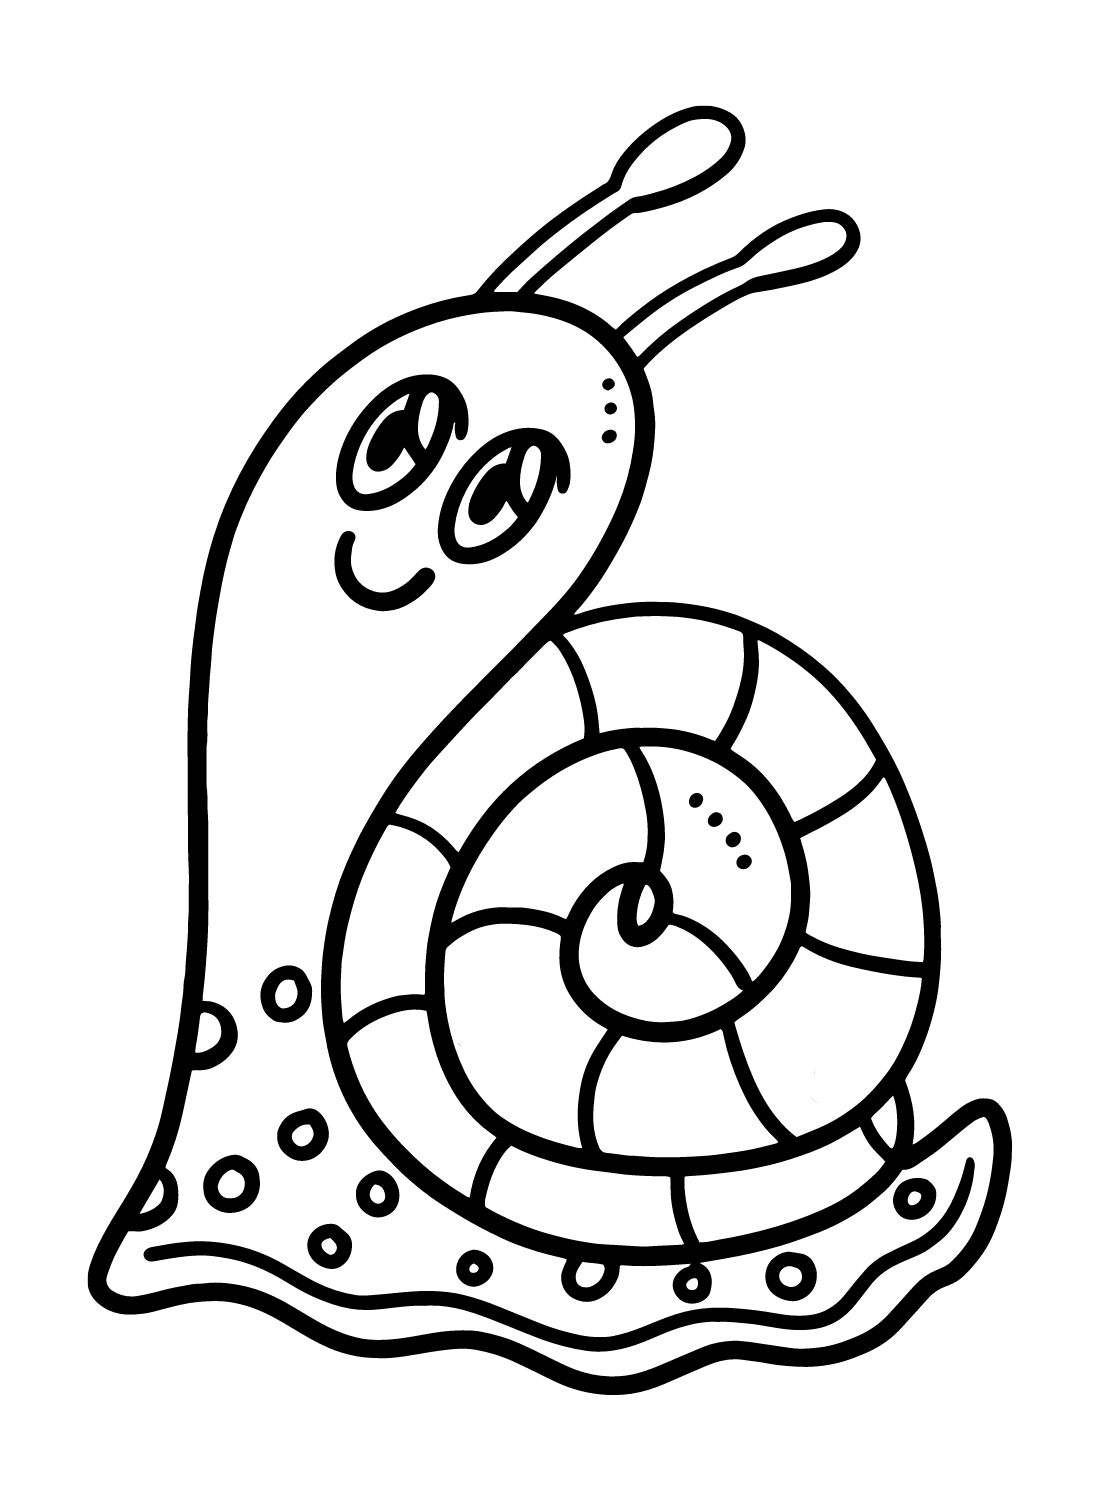 Cute Snail from Snail